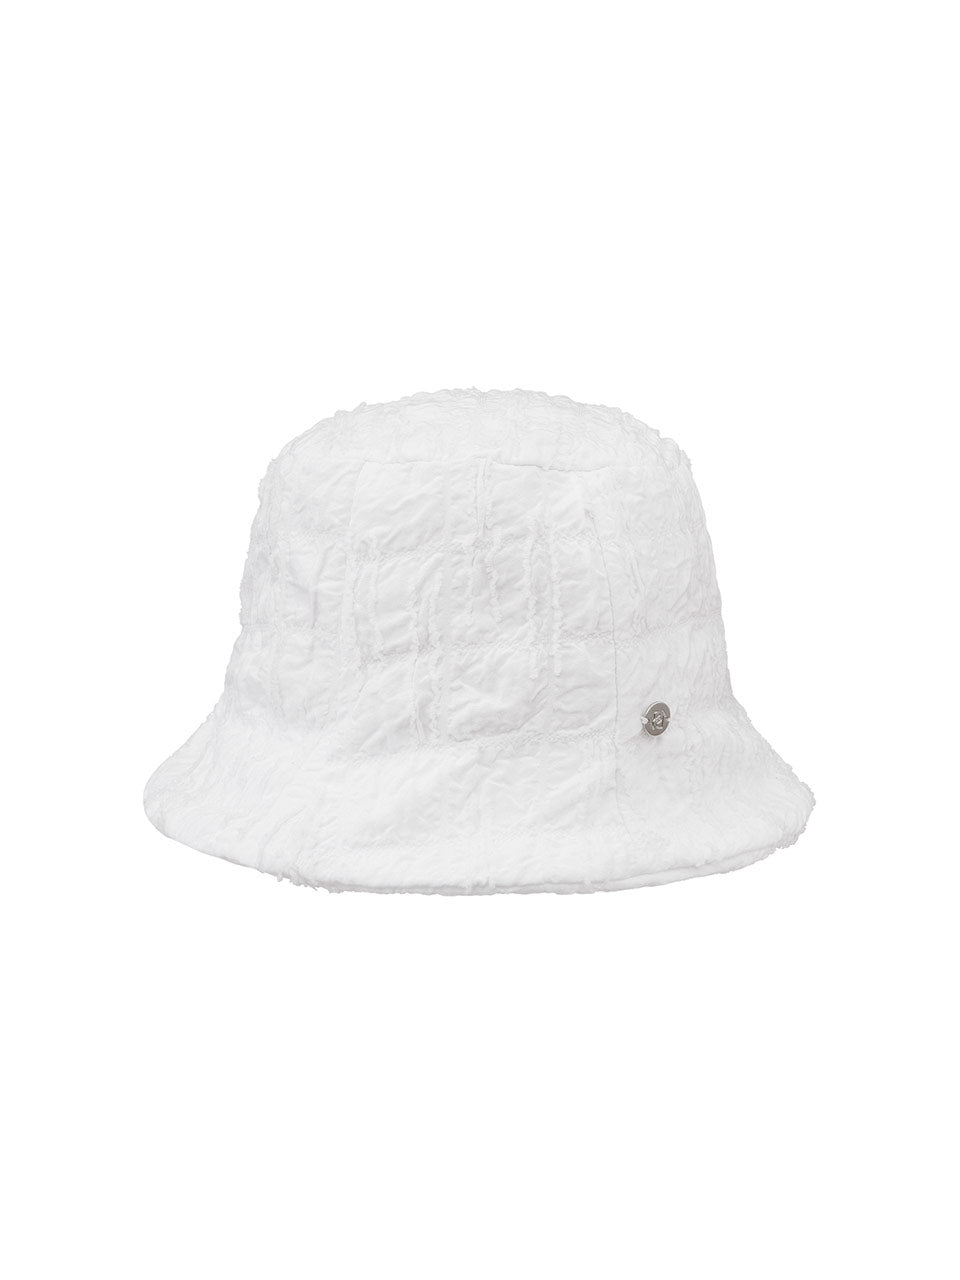 Jacquard Linkle Bucket Hat in White